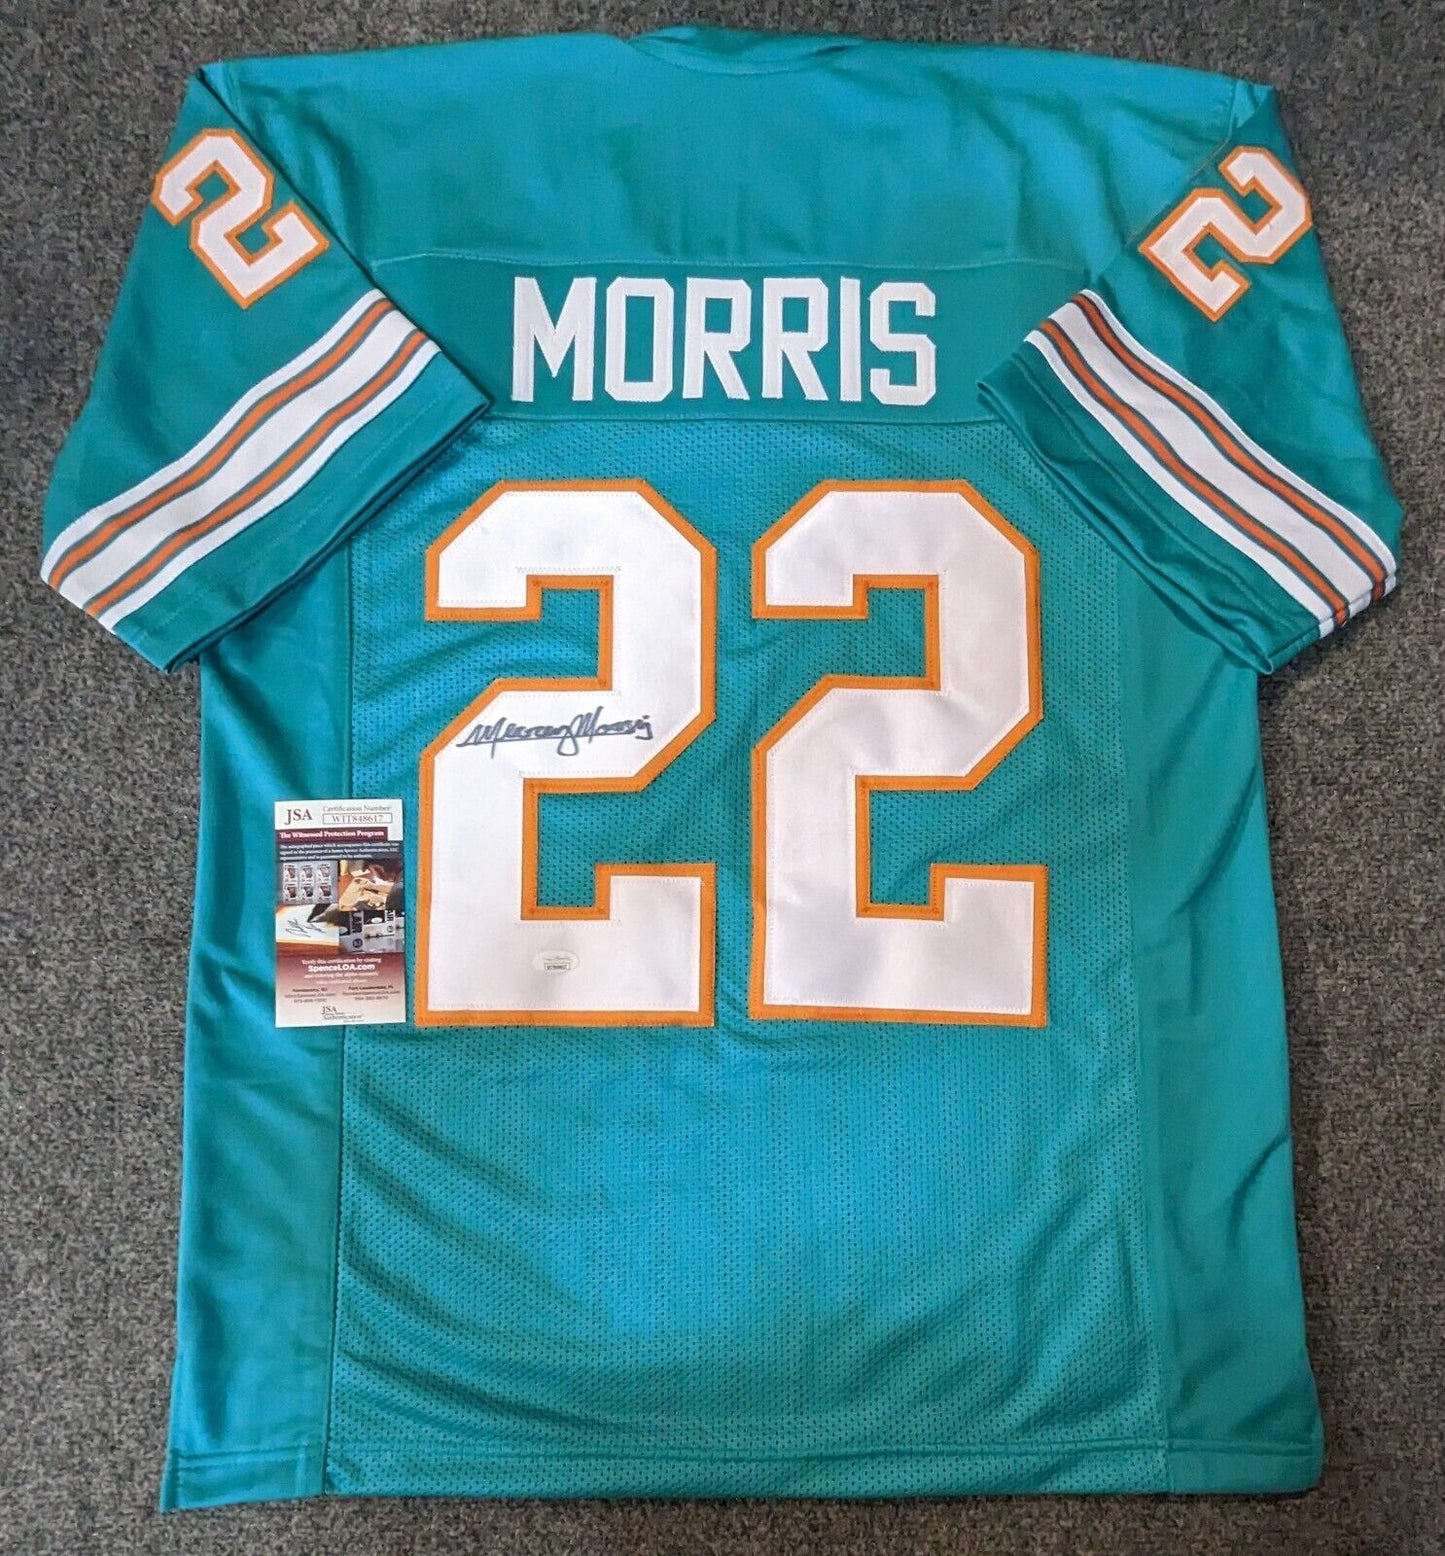 MVP Authentics Miami Dolphins Mercury Morris Autographed Signed Jersey Jsa Coa 135 sports jersey framing , jersey framing